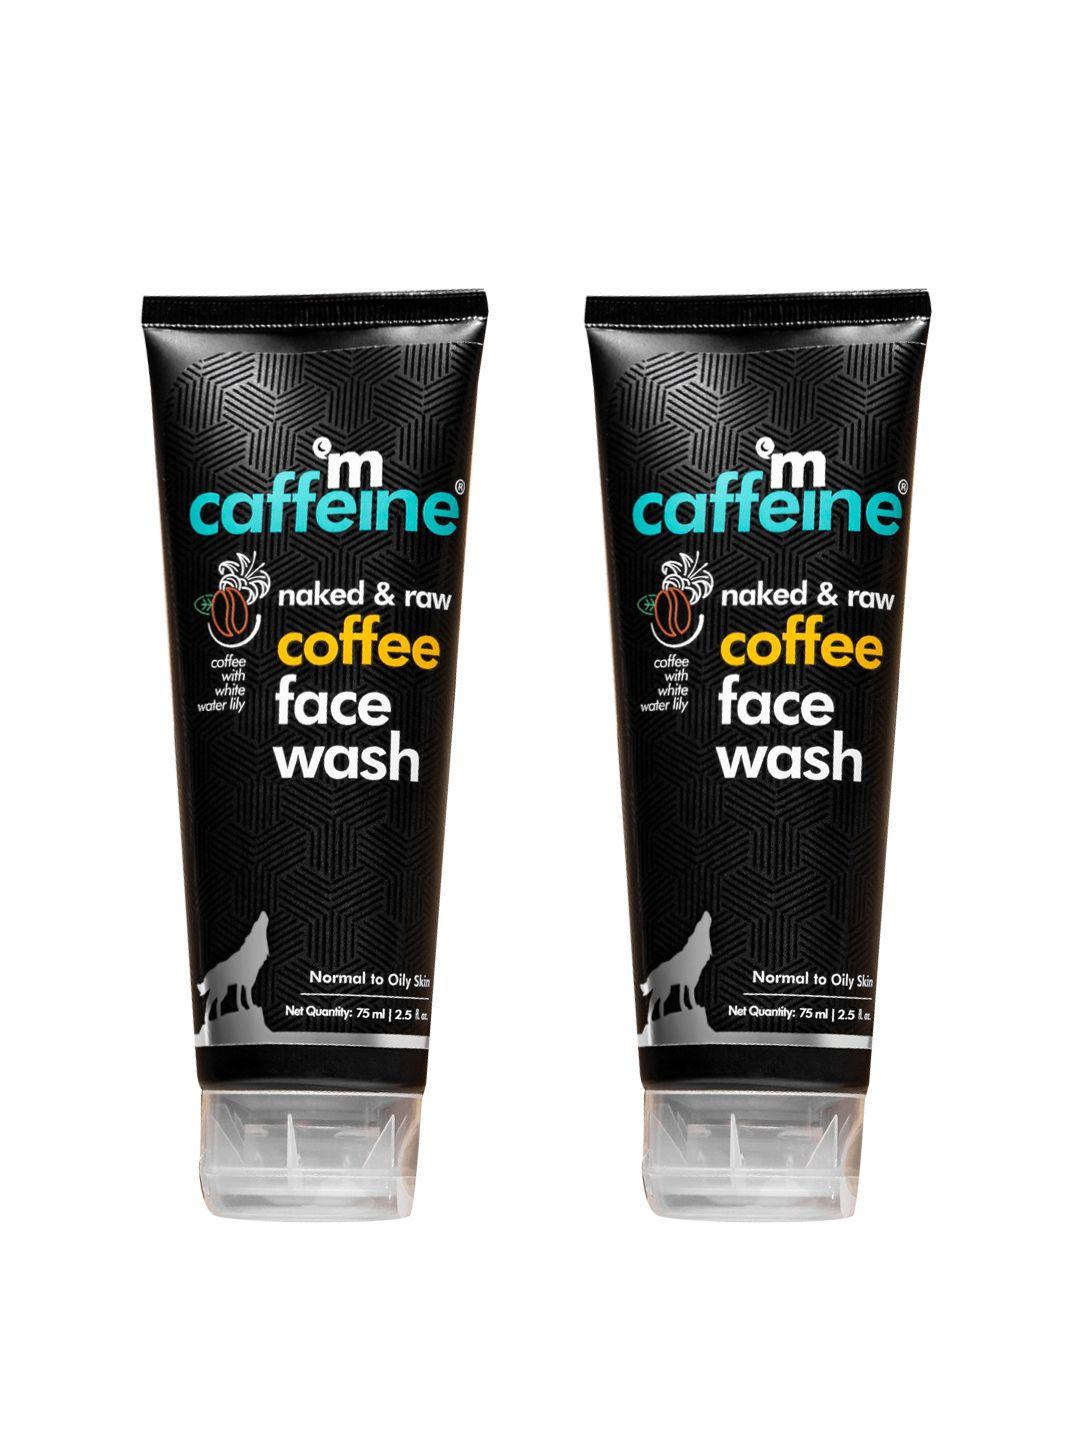 mcaffeine set of 2 coffee face wash for glowing skin - 75ml each